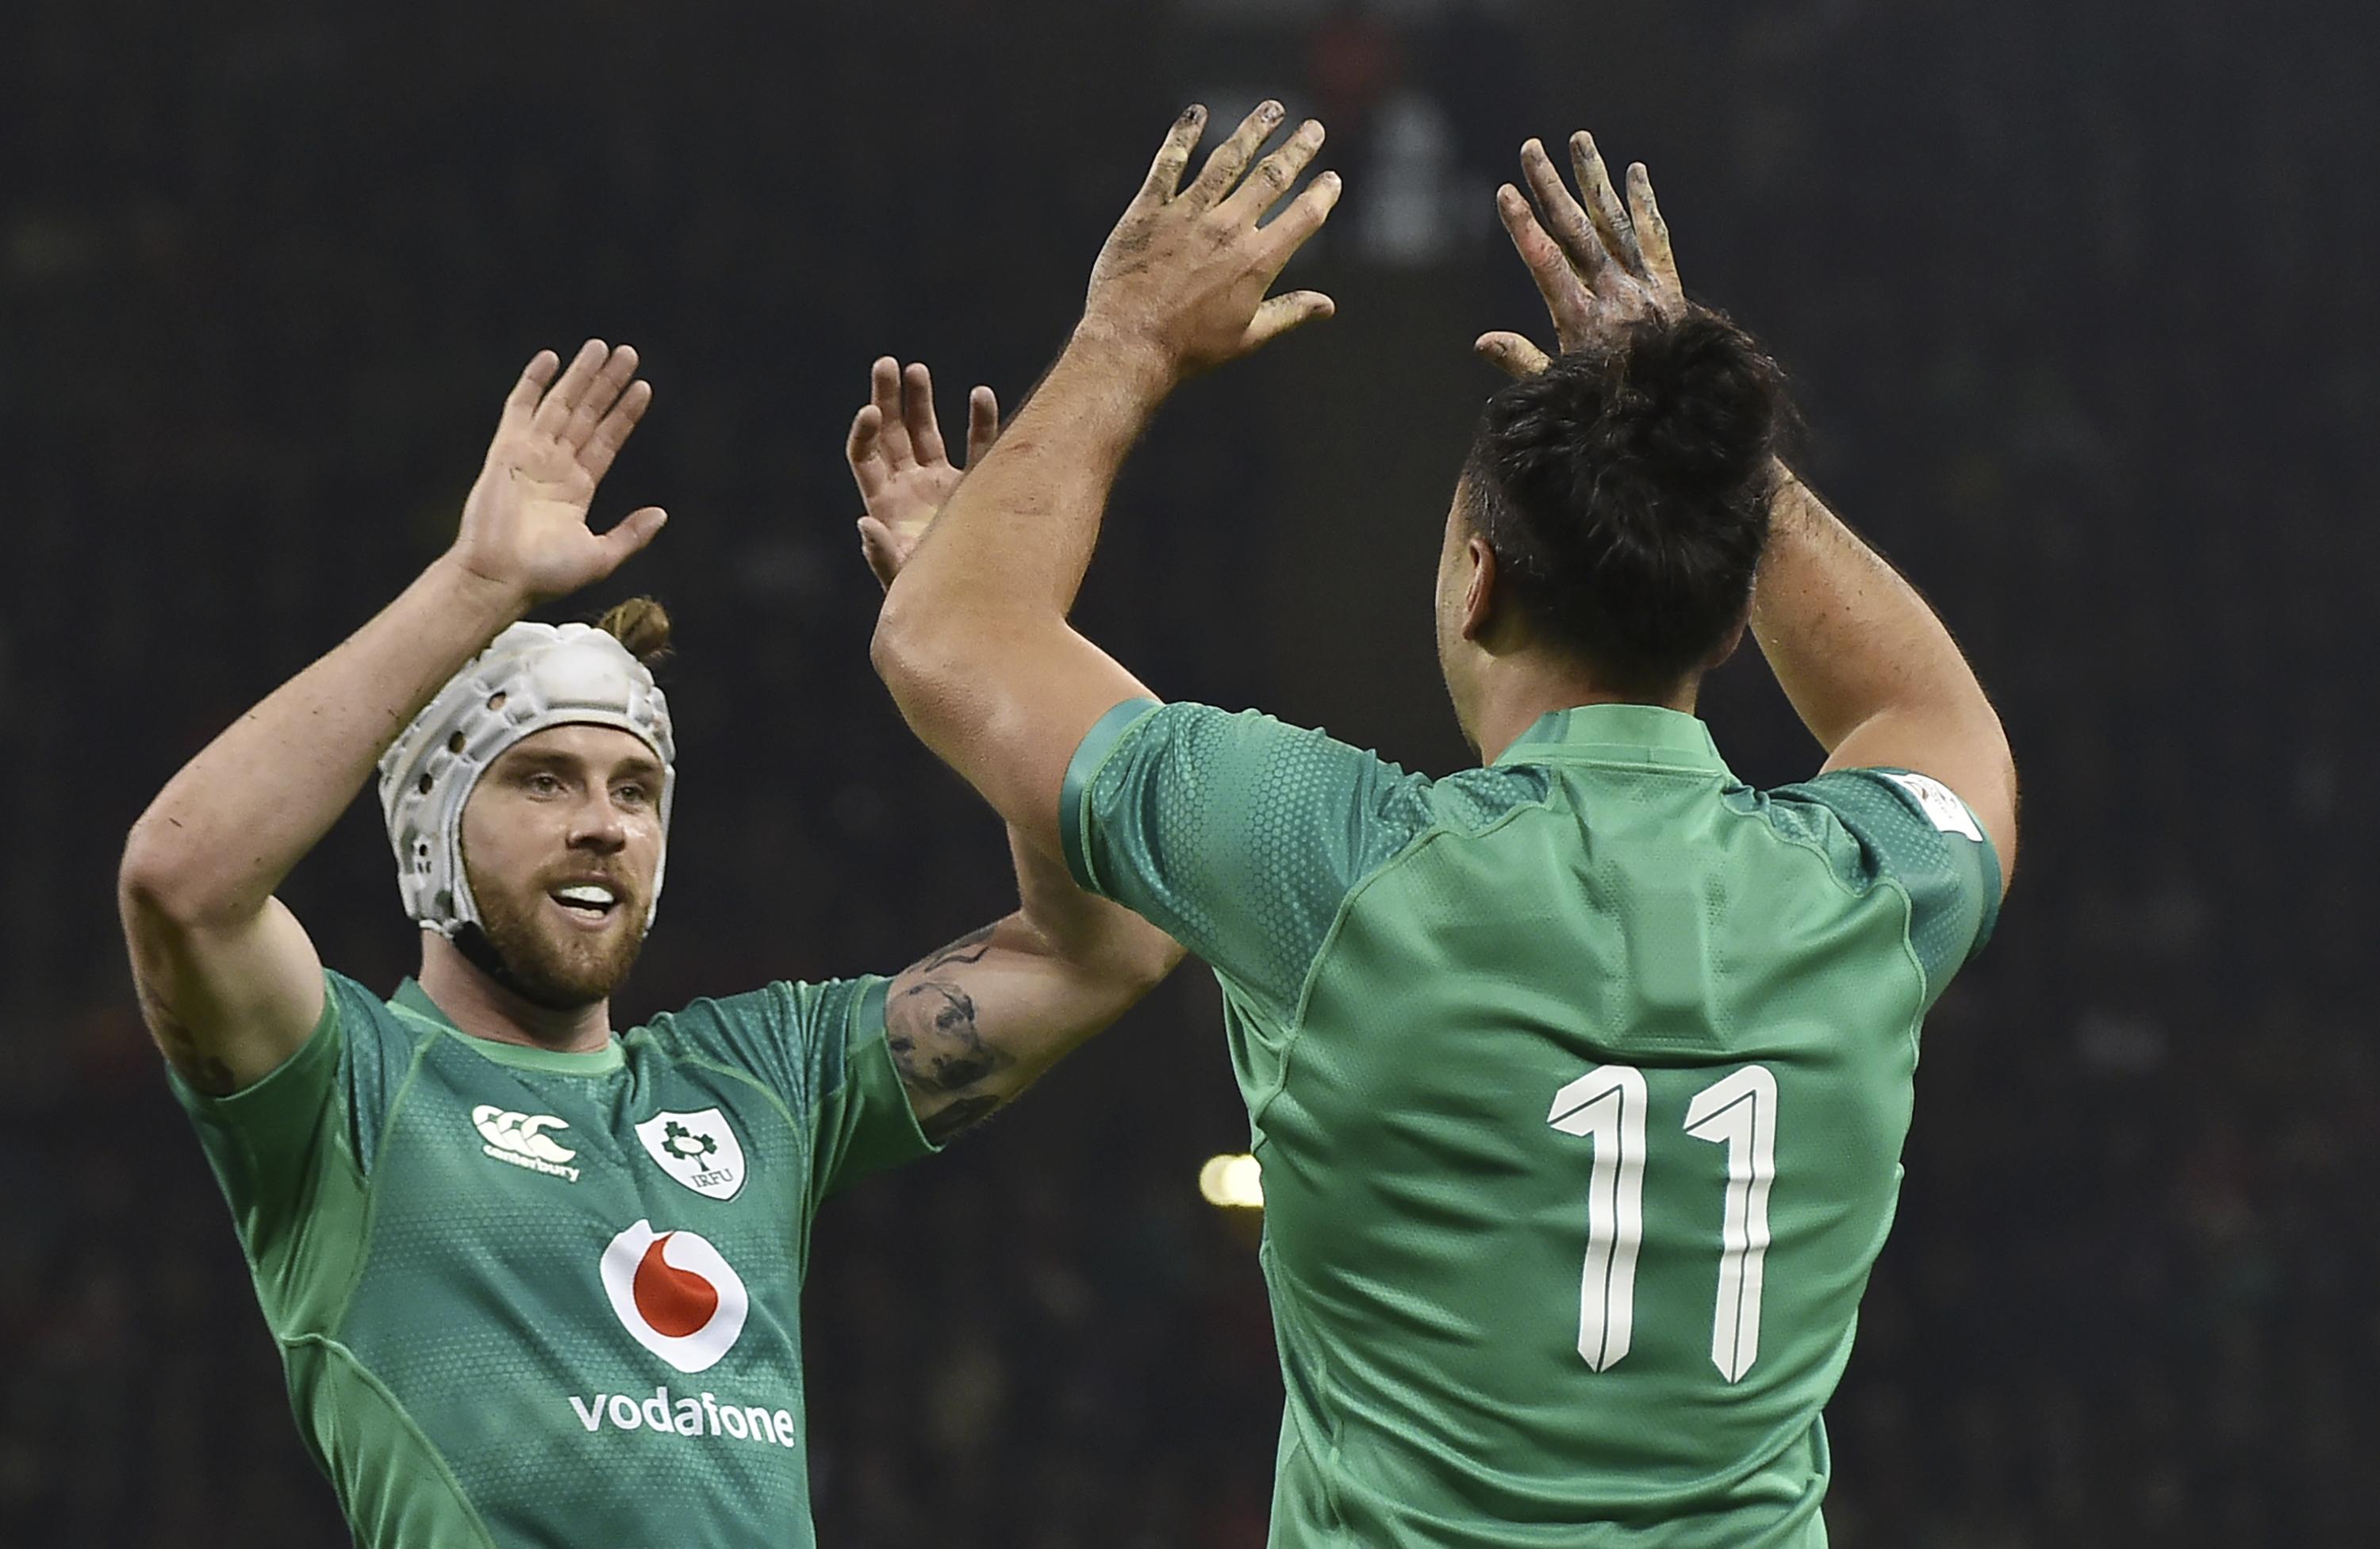 6 Nations Ireland tops Wales 34-10, spoils Gatlands return